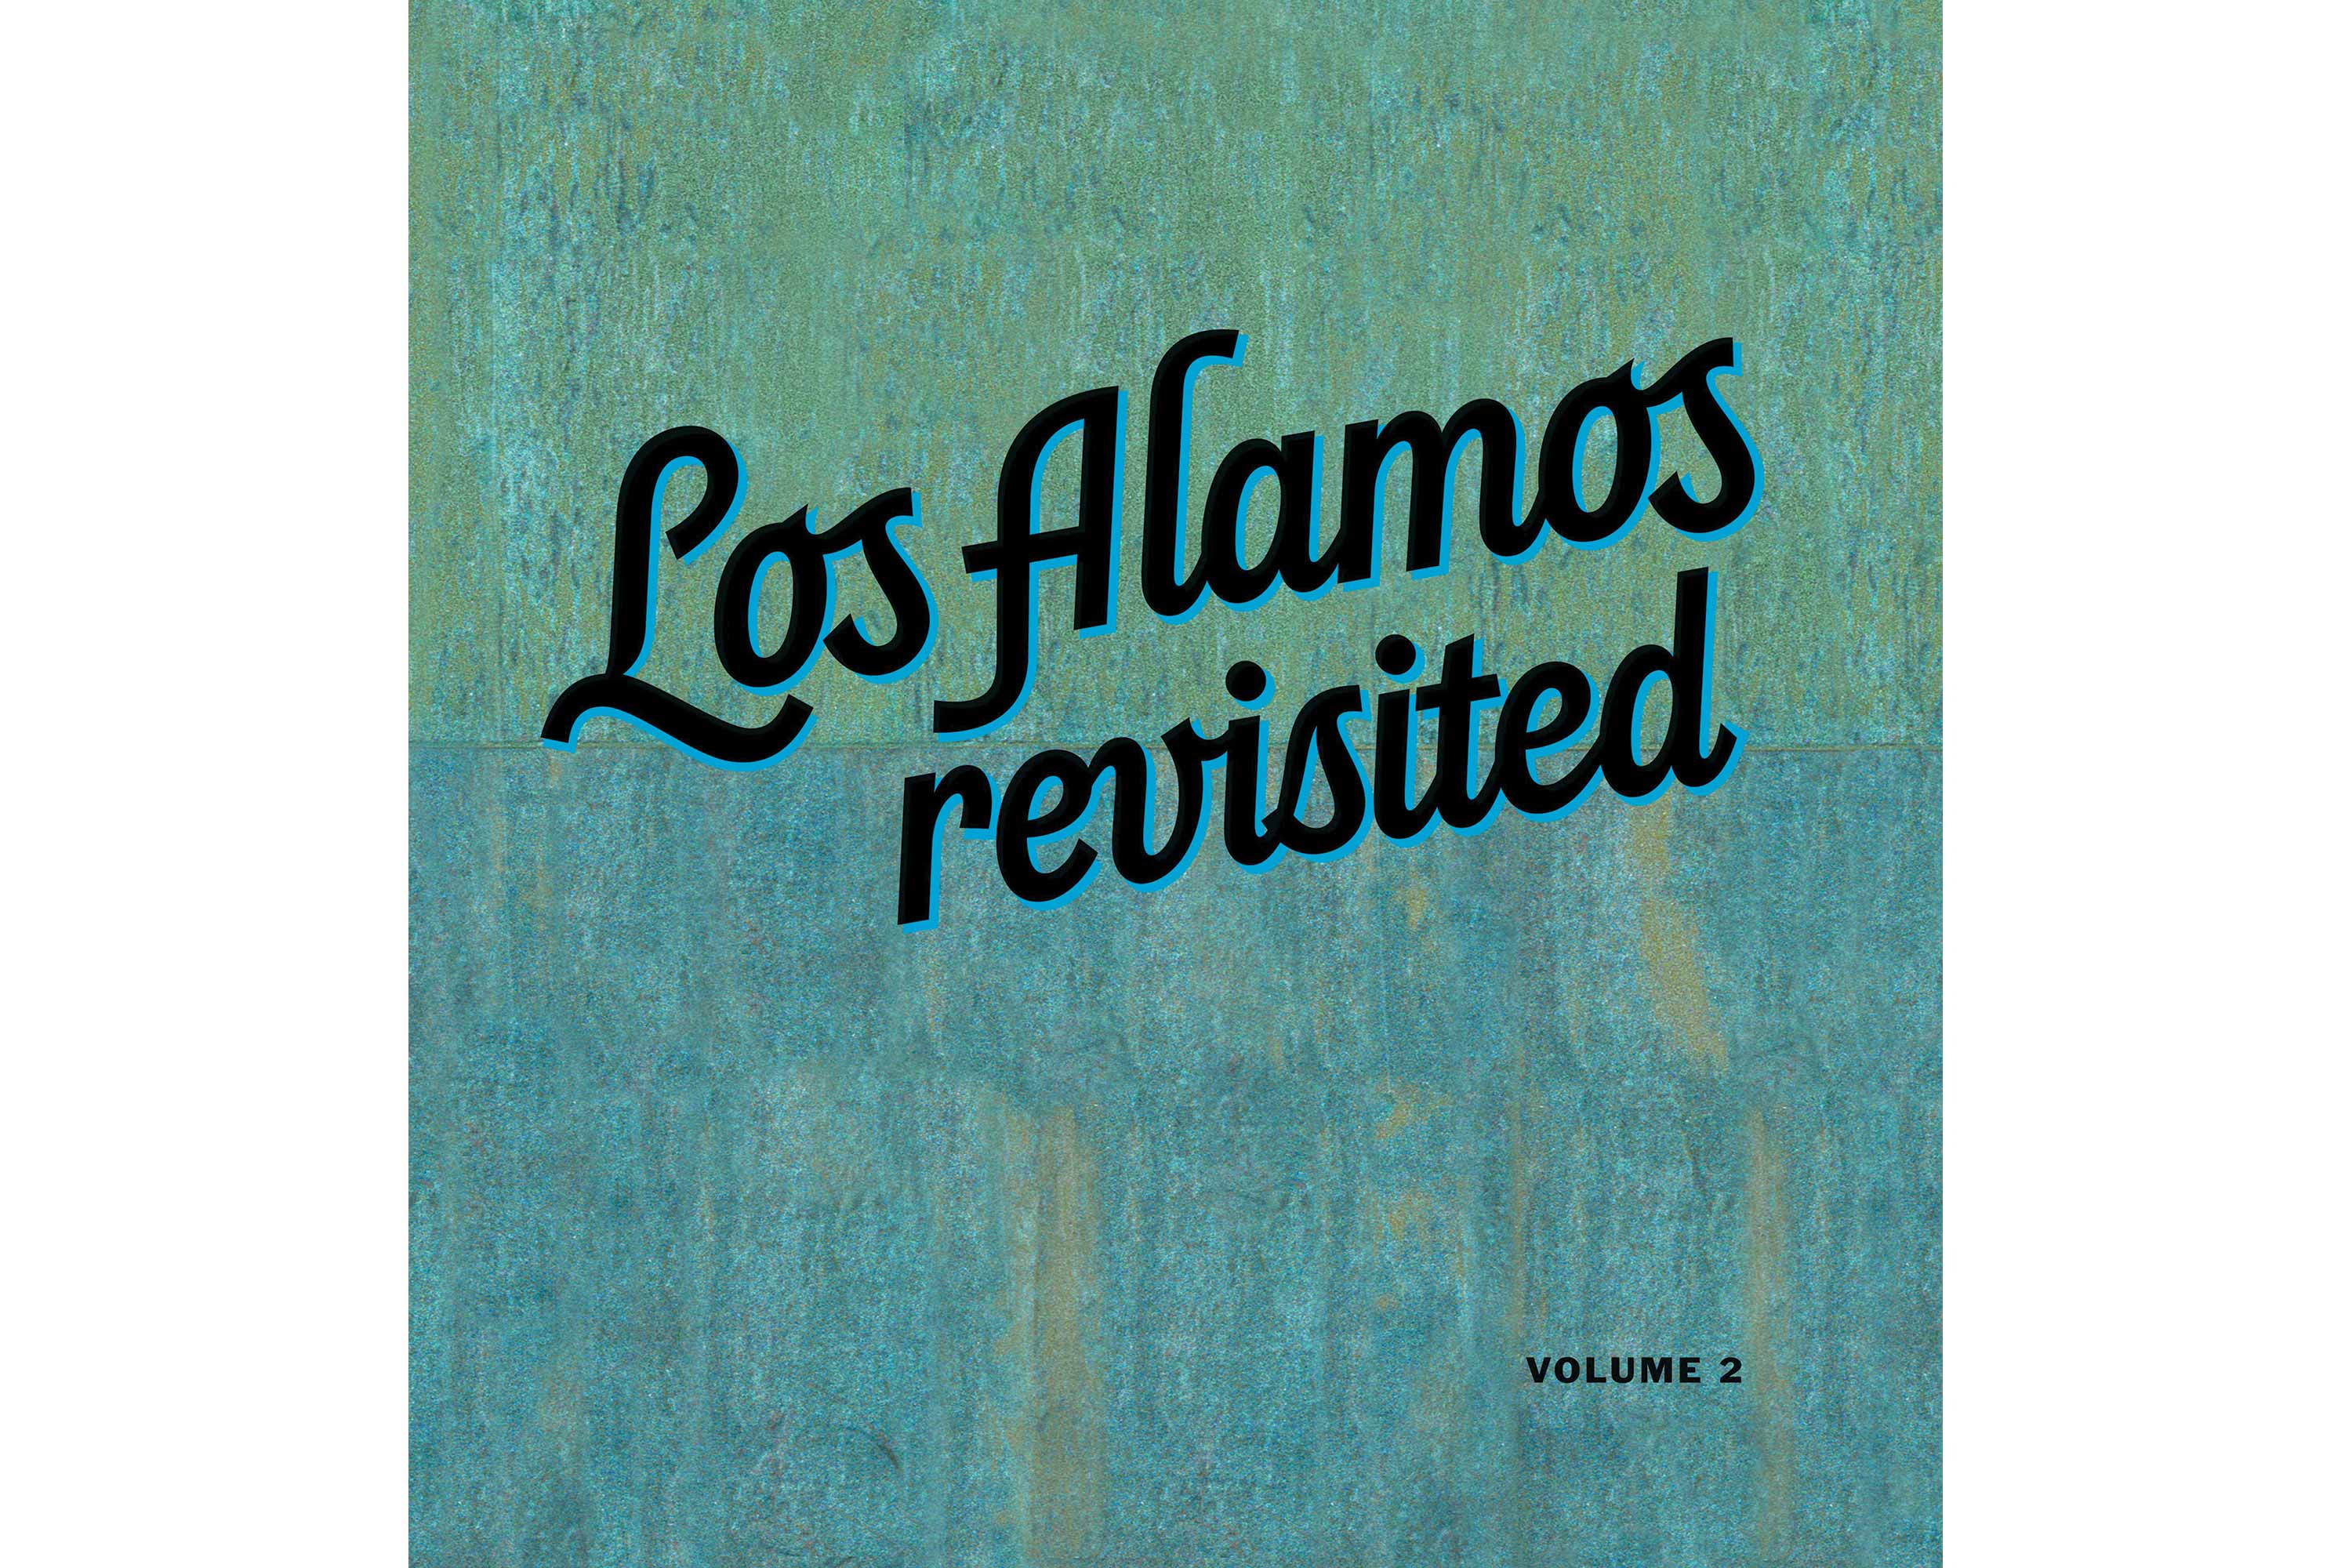 William Eggleston: Los Alamos Revisited | David Zwirner Books